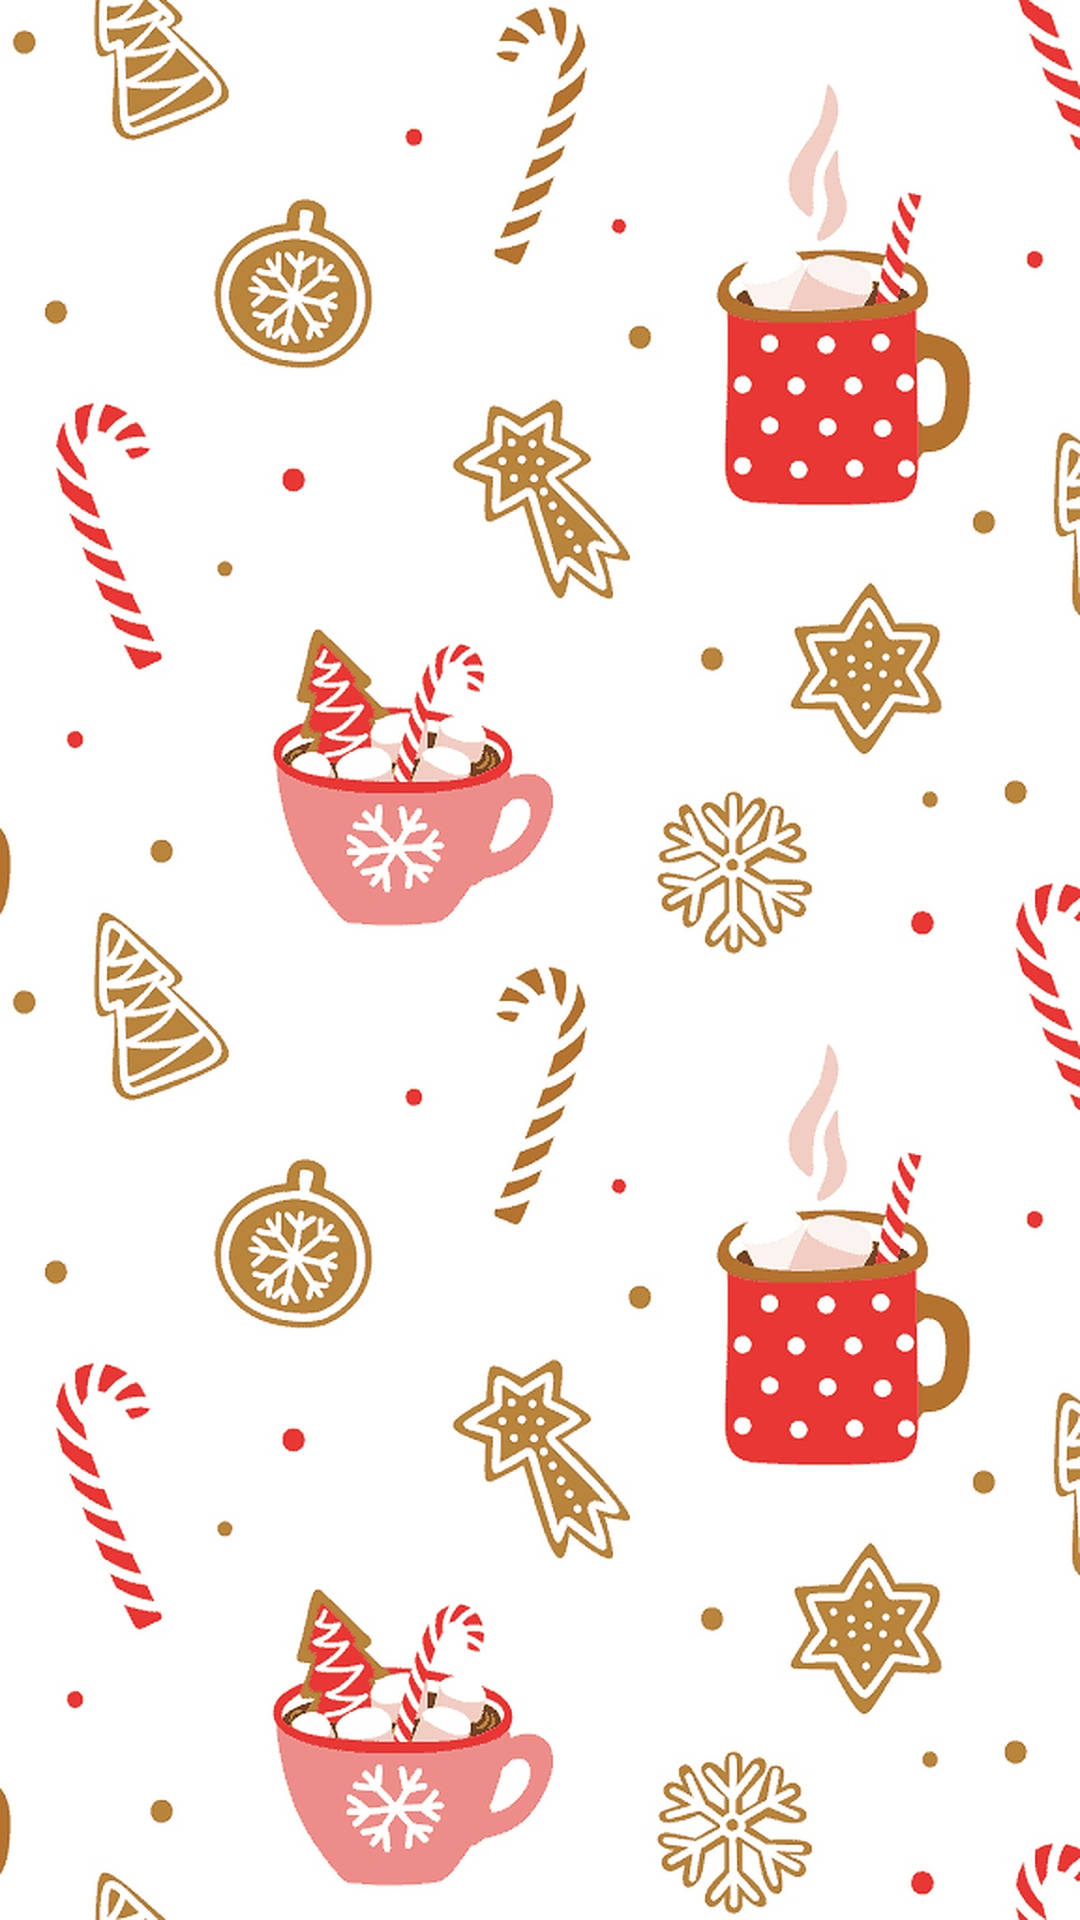 Delightful Christmas Aesthetics - An Adorable Display of Festive Cheer Wallpaper